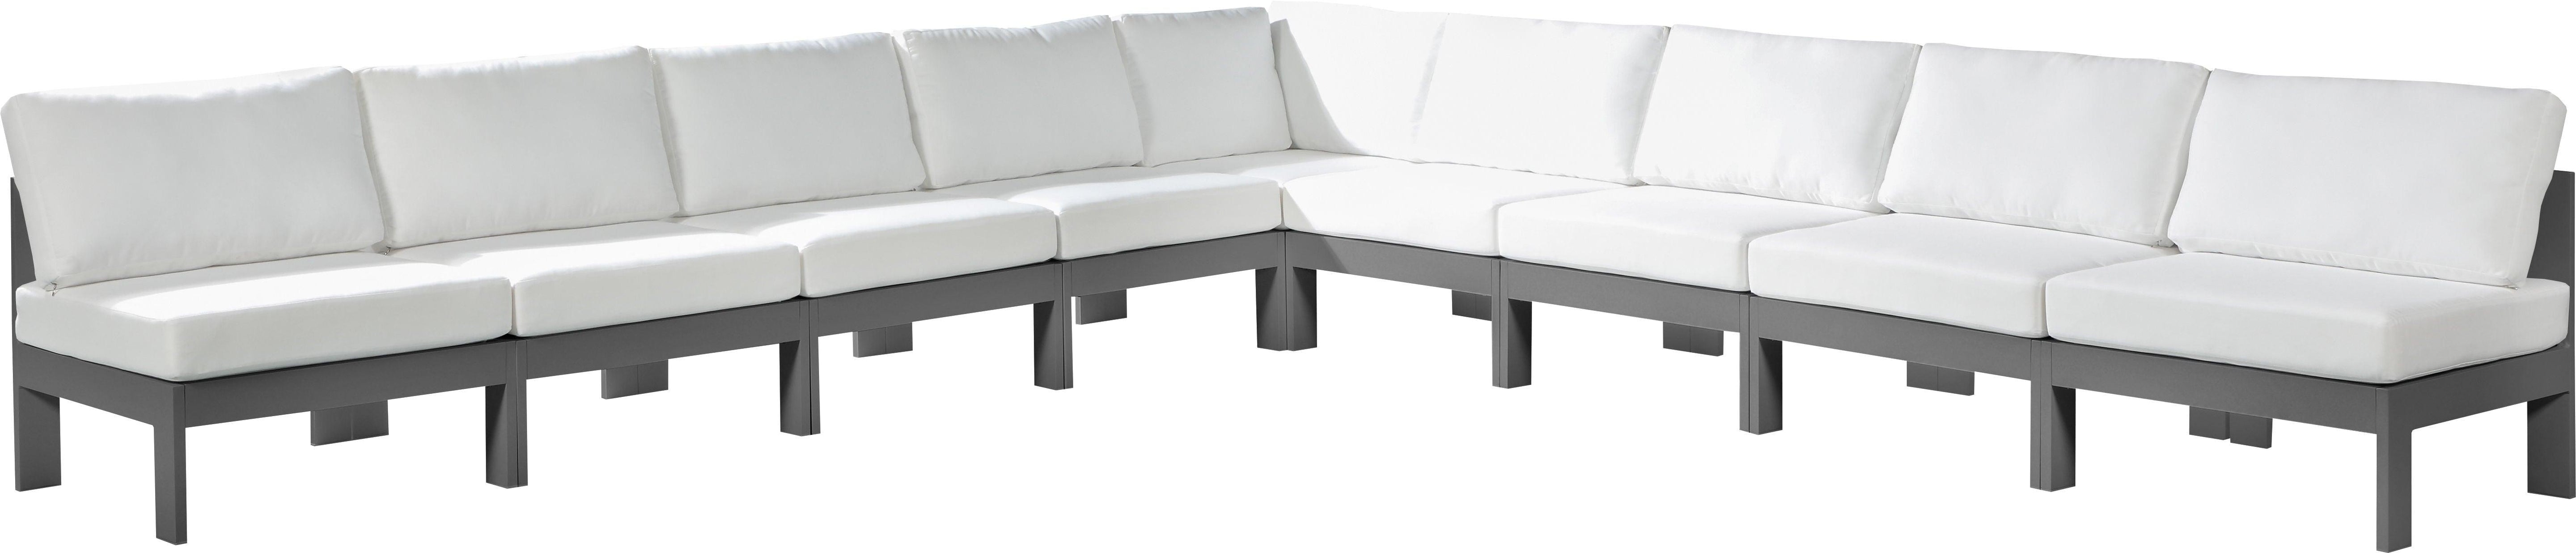 Meridian Furniture - Nizuc - Outdoor Patio Modular Sectional 9 Piece - White - Fabric - Modern & Contemporary - 5th Avenue Furniture